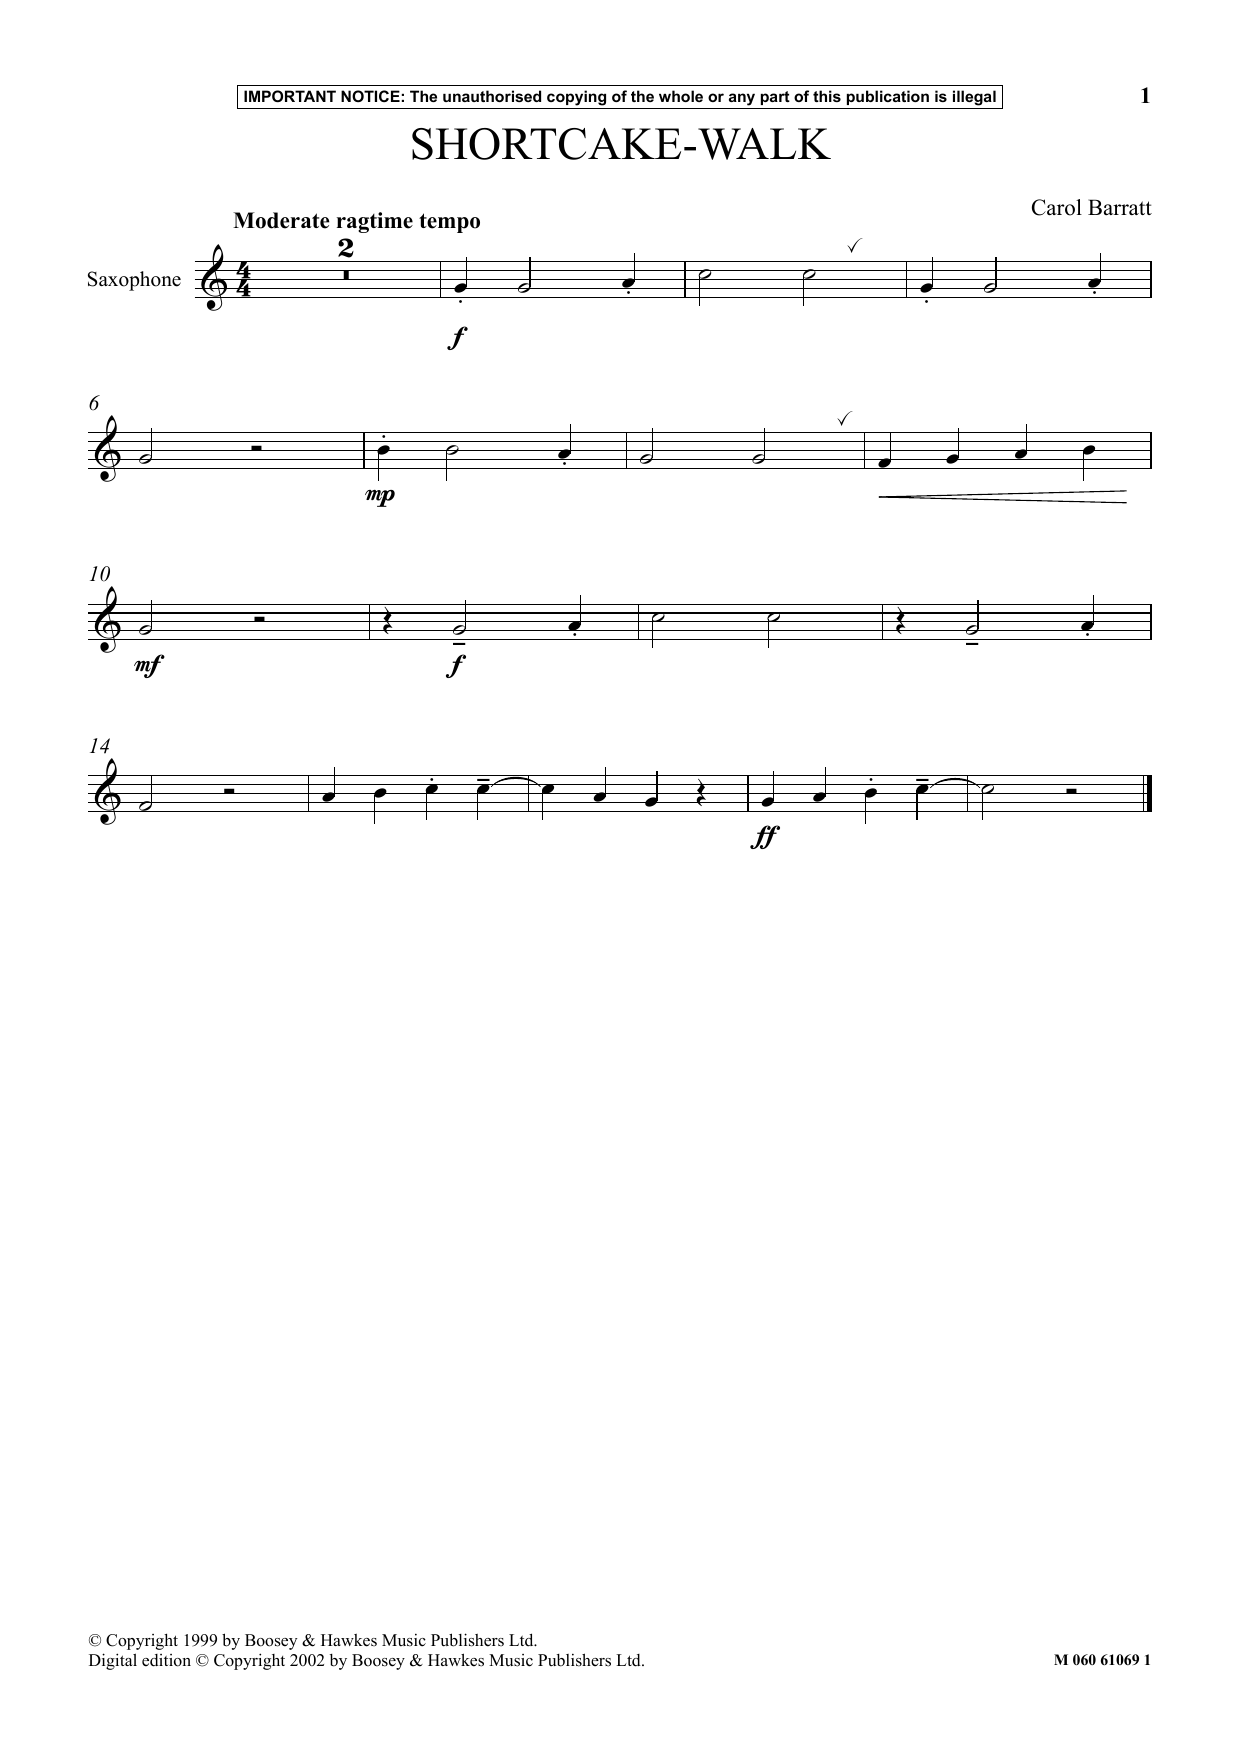 Download Carol Barratt Shortcake Walk Sheet Music and learn how to play Instrumental Solo PDF digital score in minutes